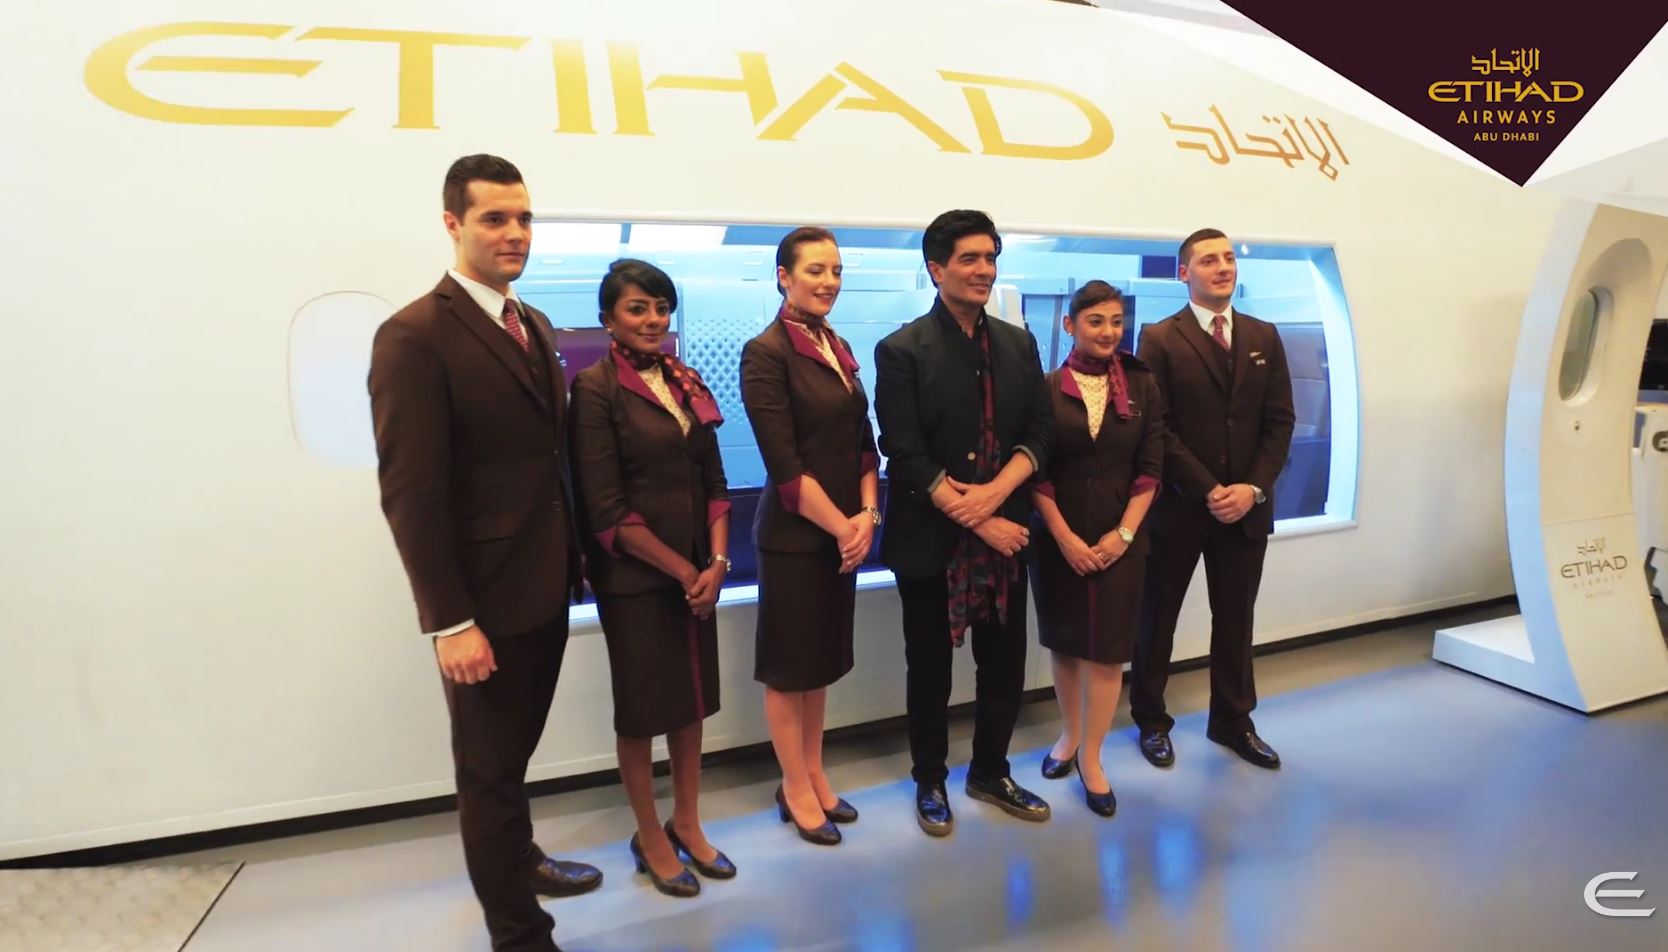 Manish Malhotra Visits The Etihad Airways Innovation Centre